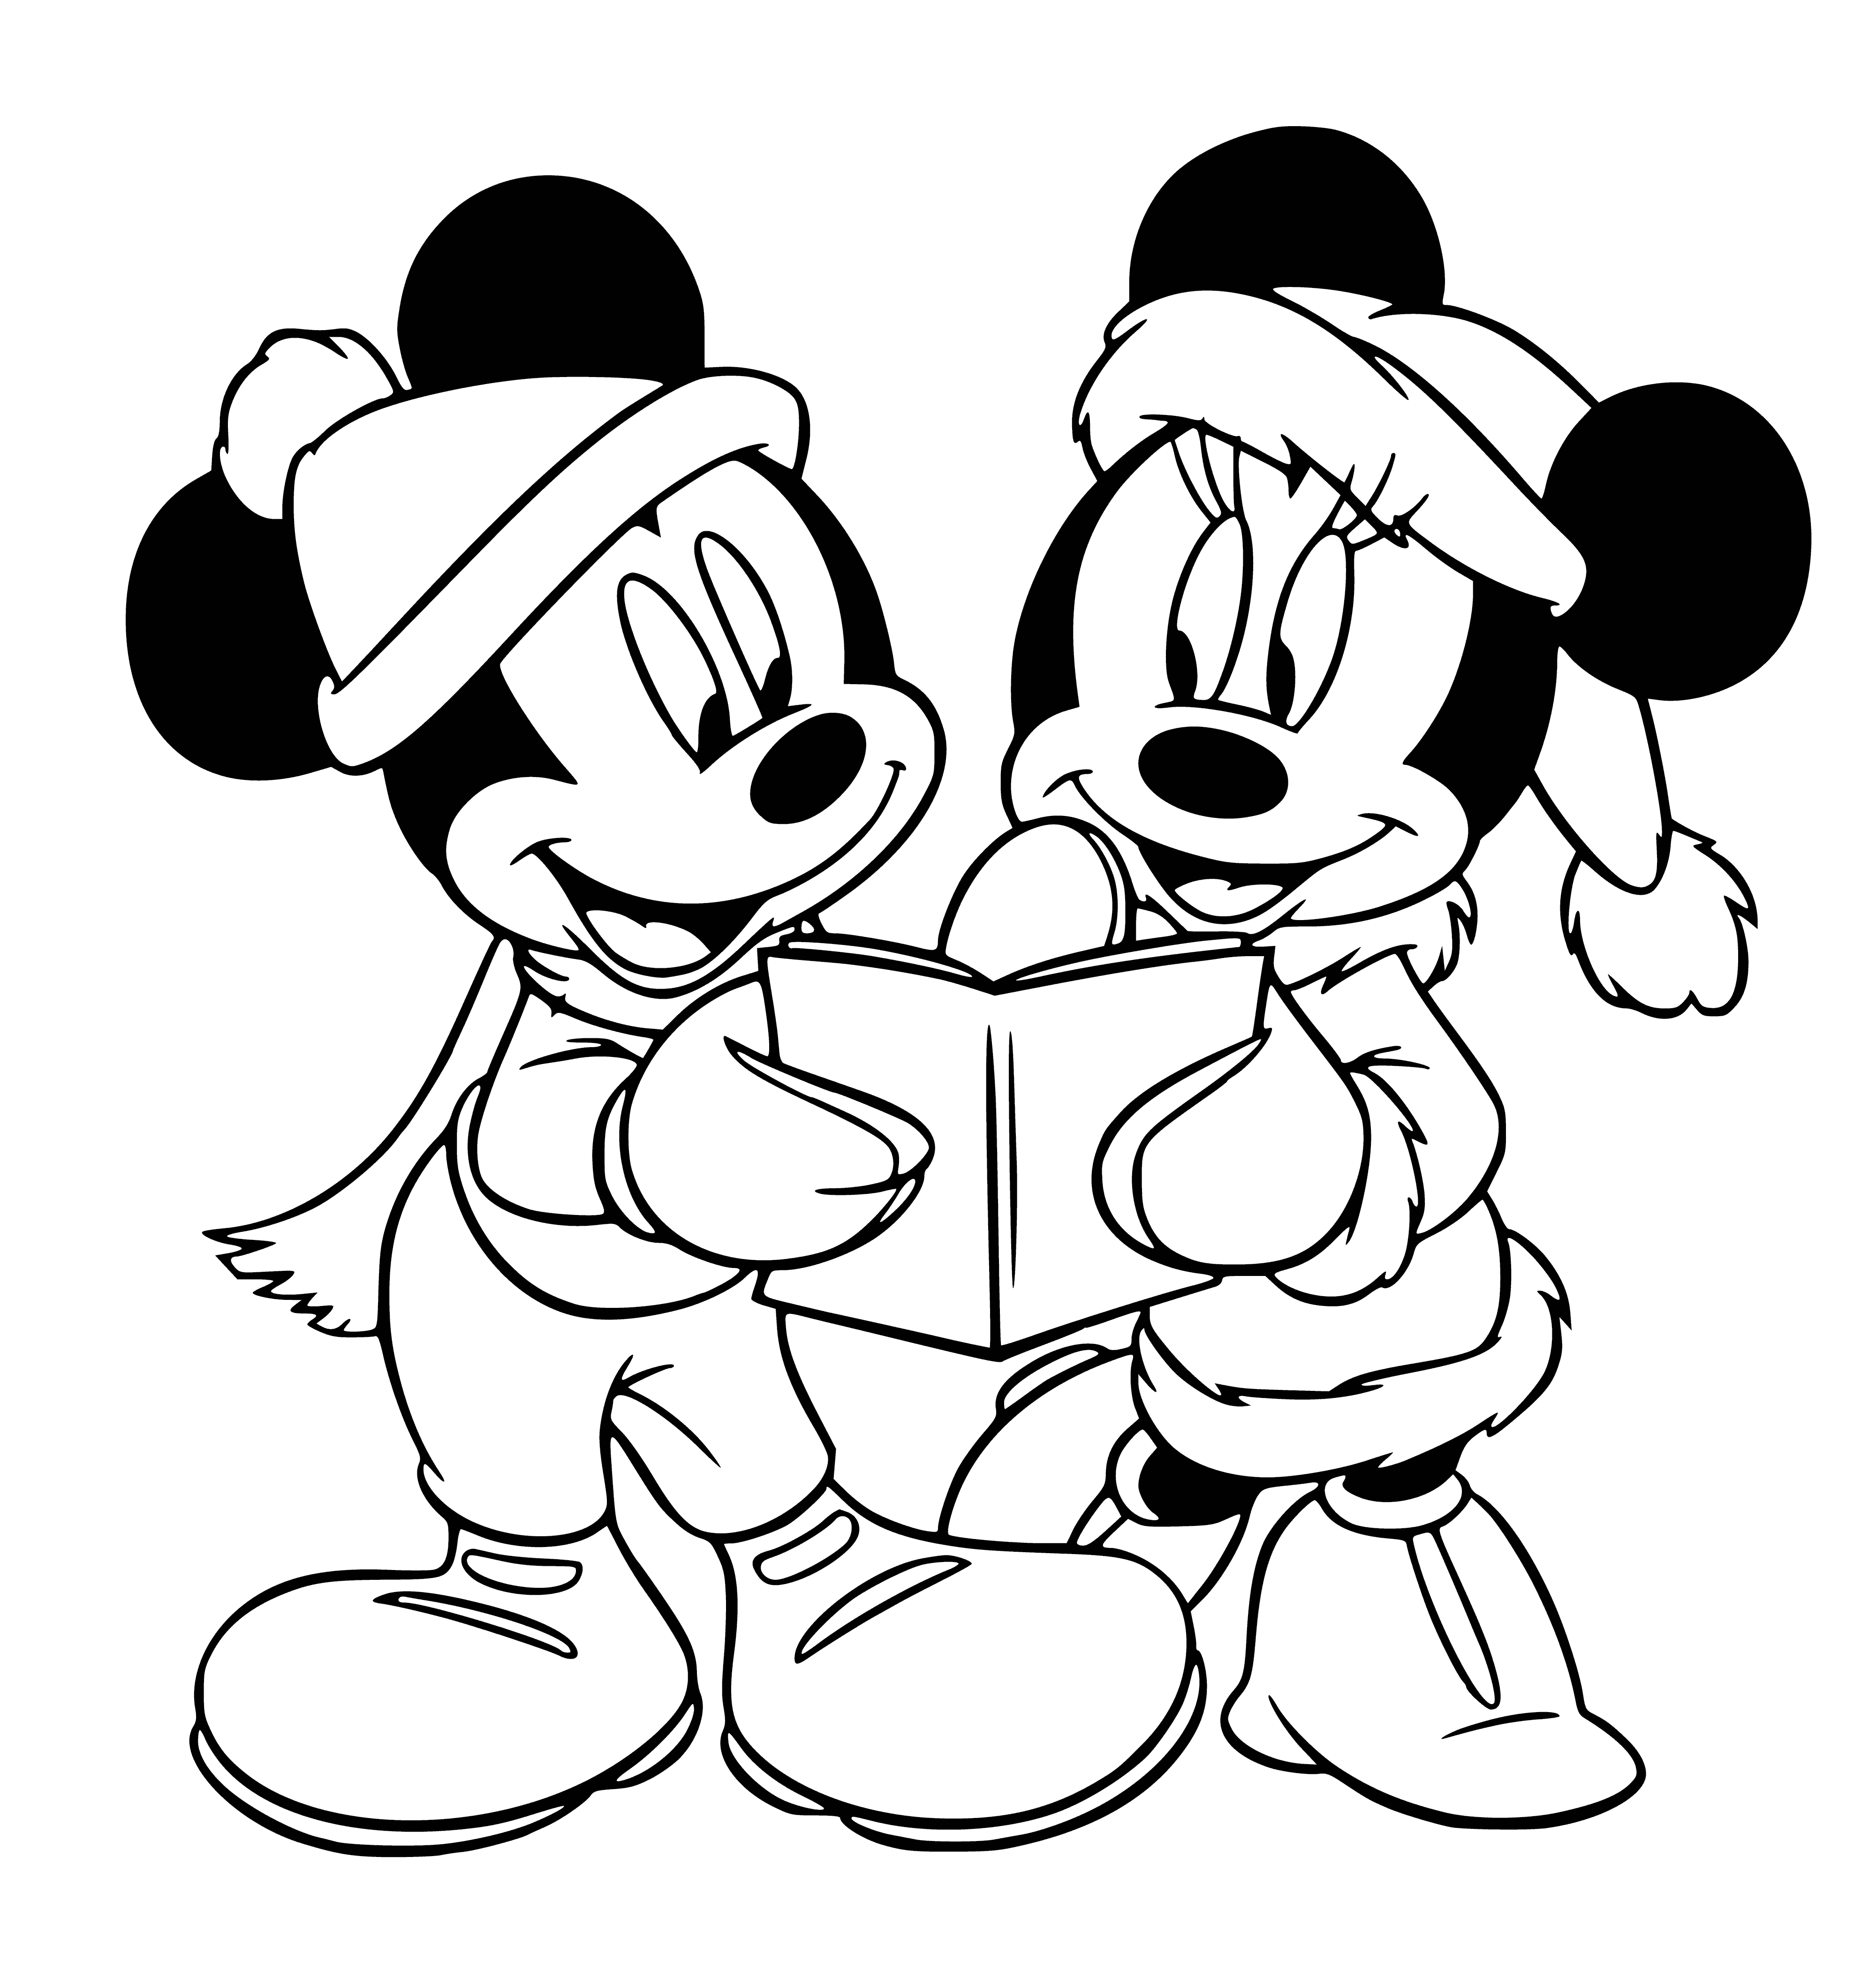 Mini en Mickey Mouse kleurplaat